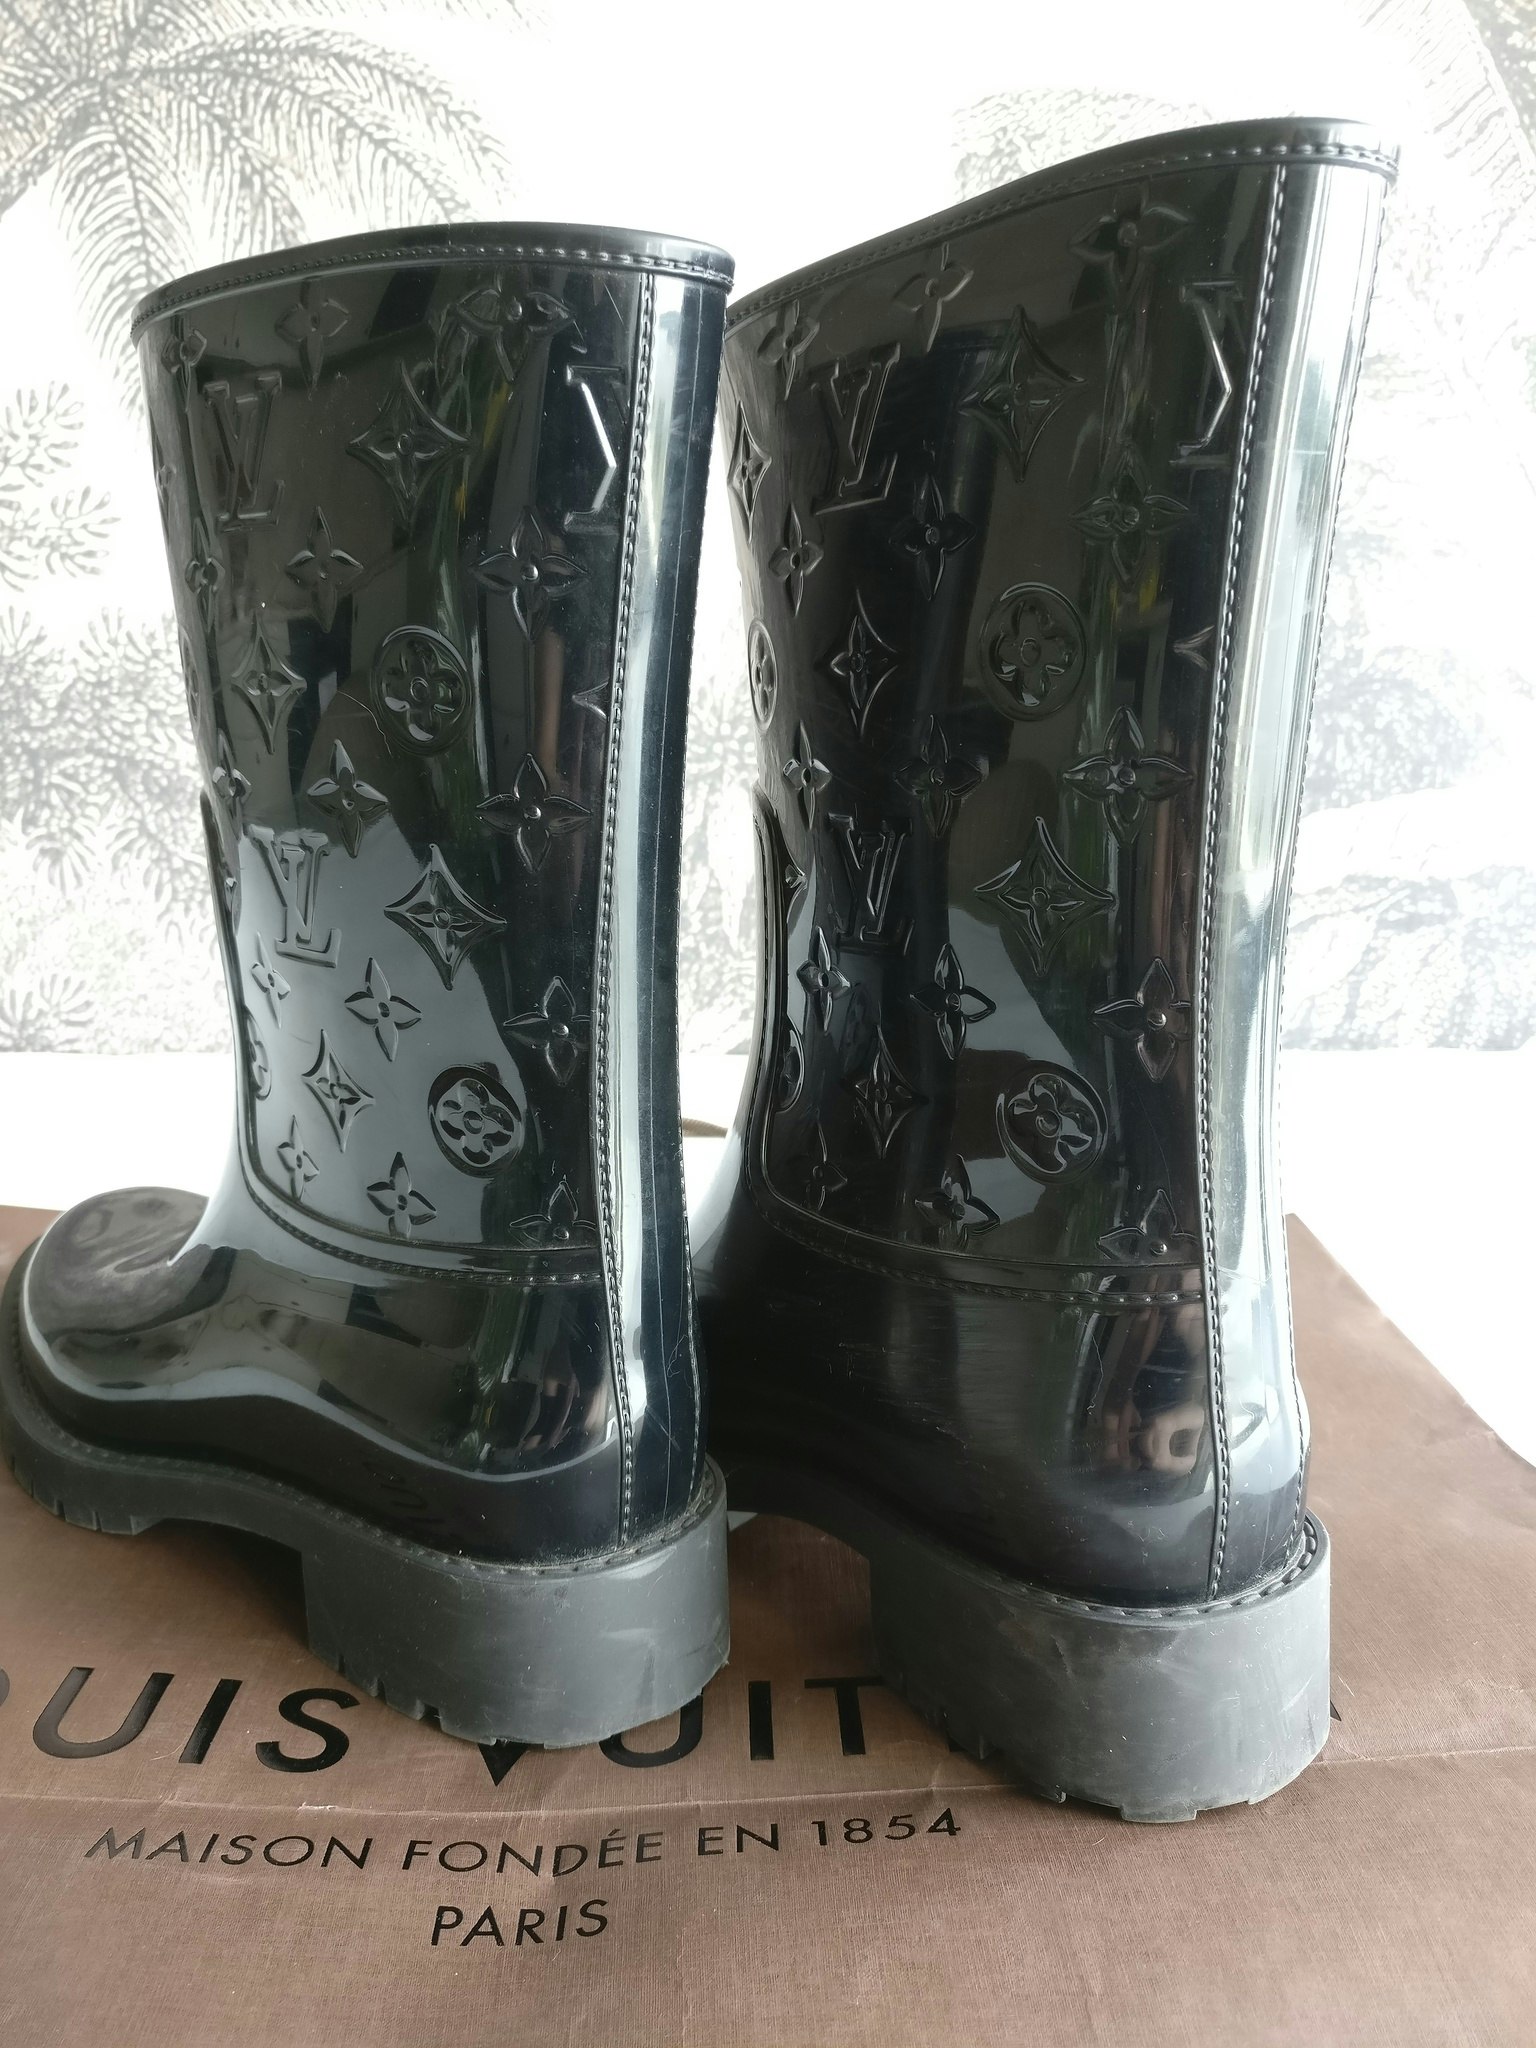 Louis Vuitton Drops Flat Half Boot BLACK. Size 39.0